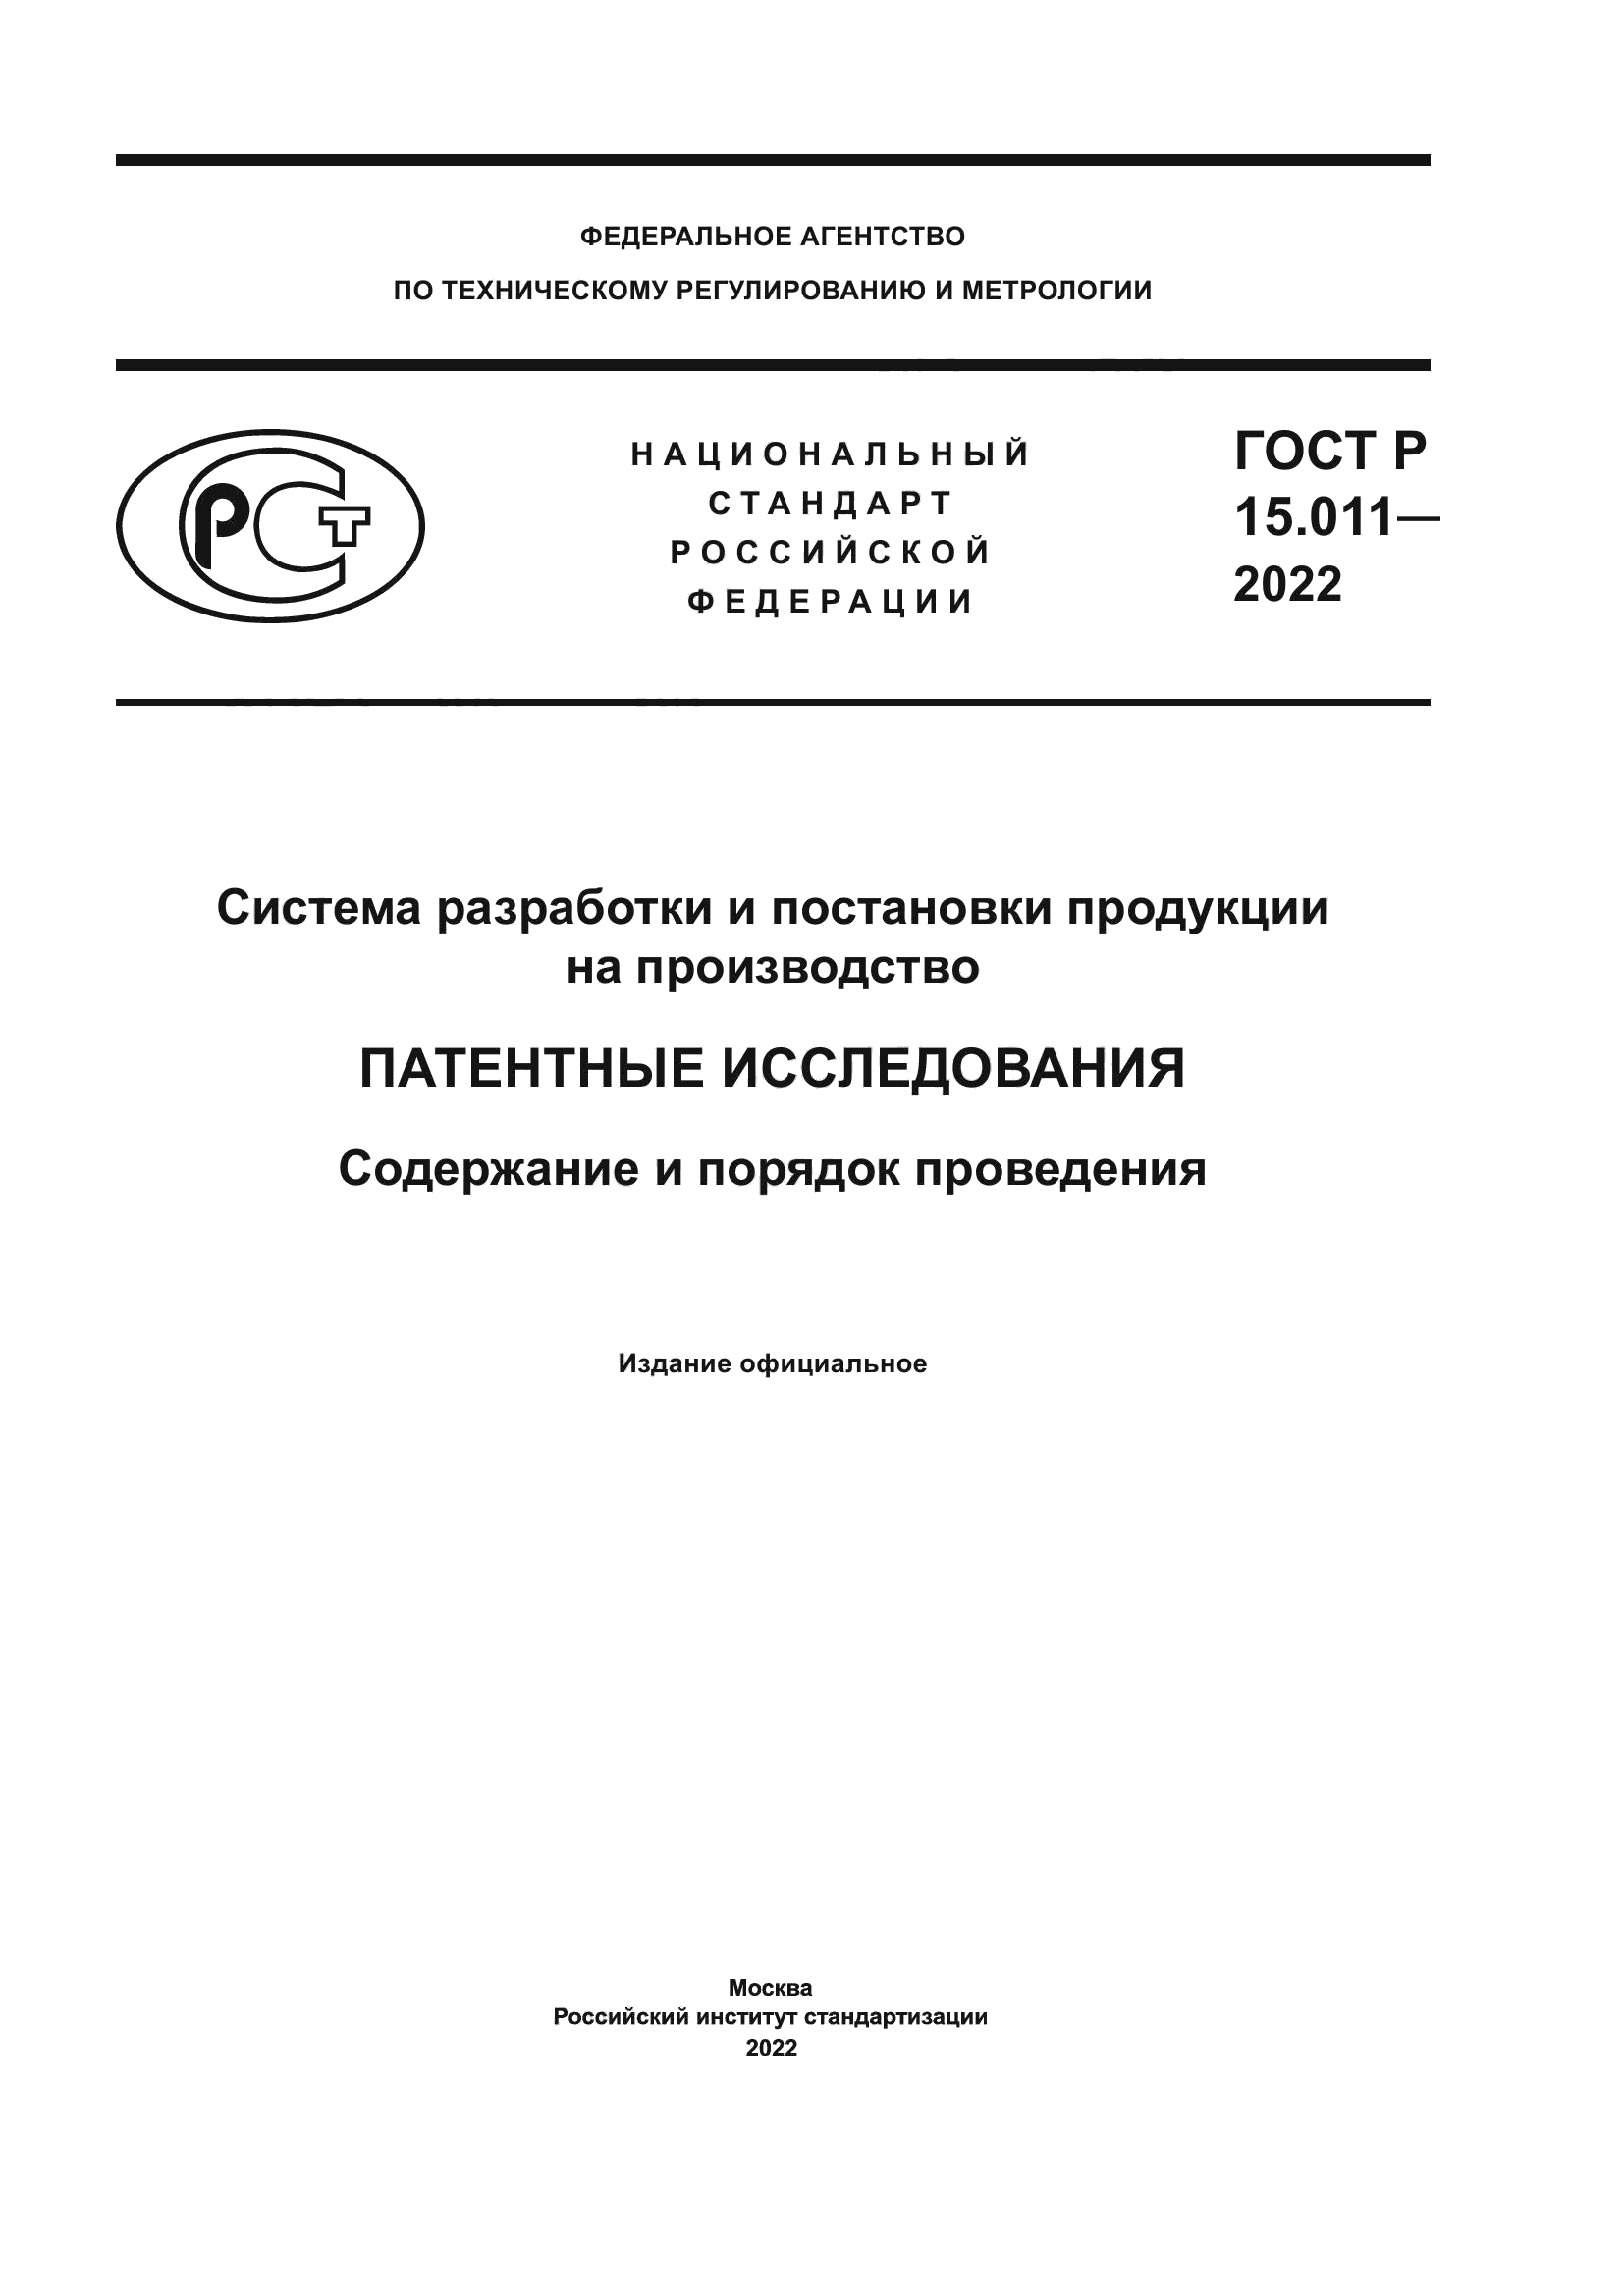 ГОСТ Р 15.011-2022